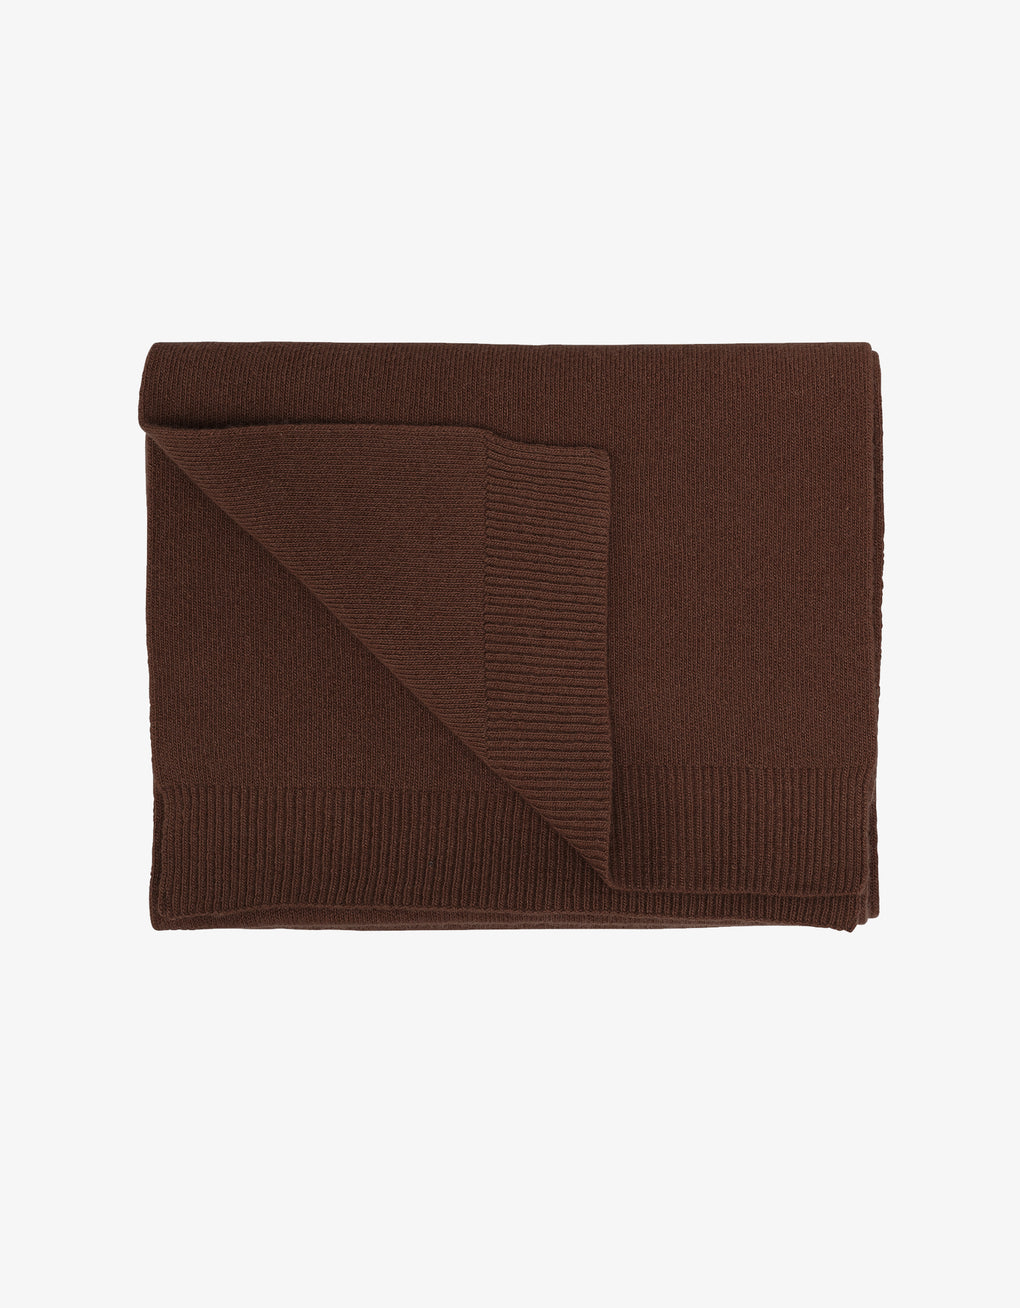 Merino wool scarf in coffee brown